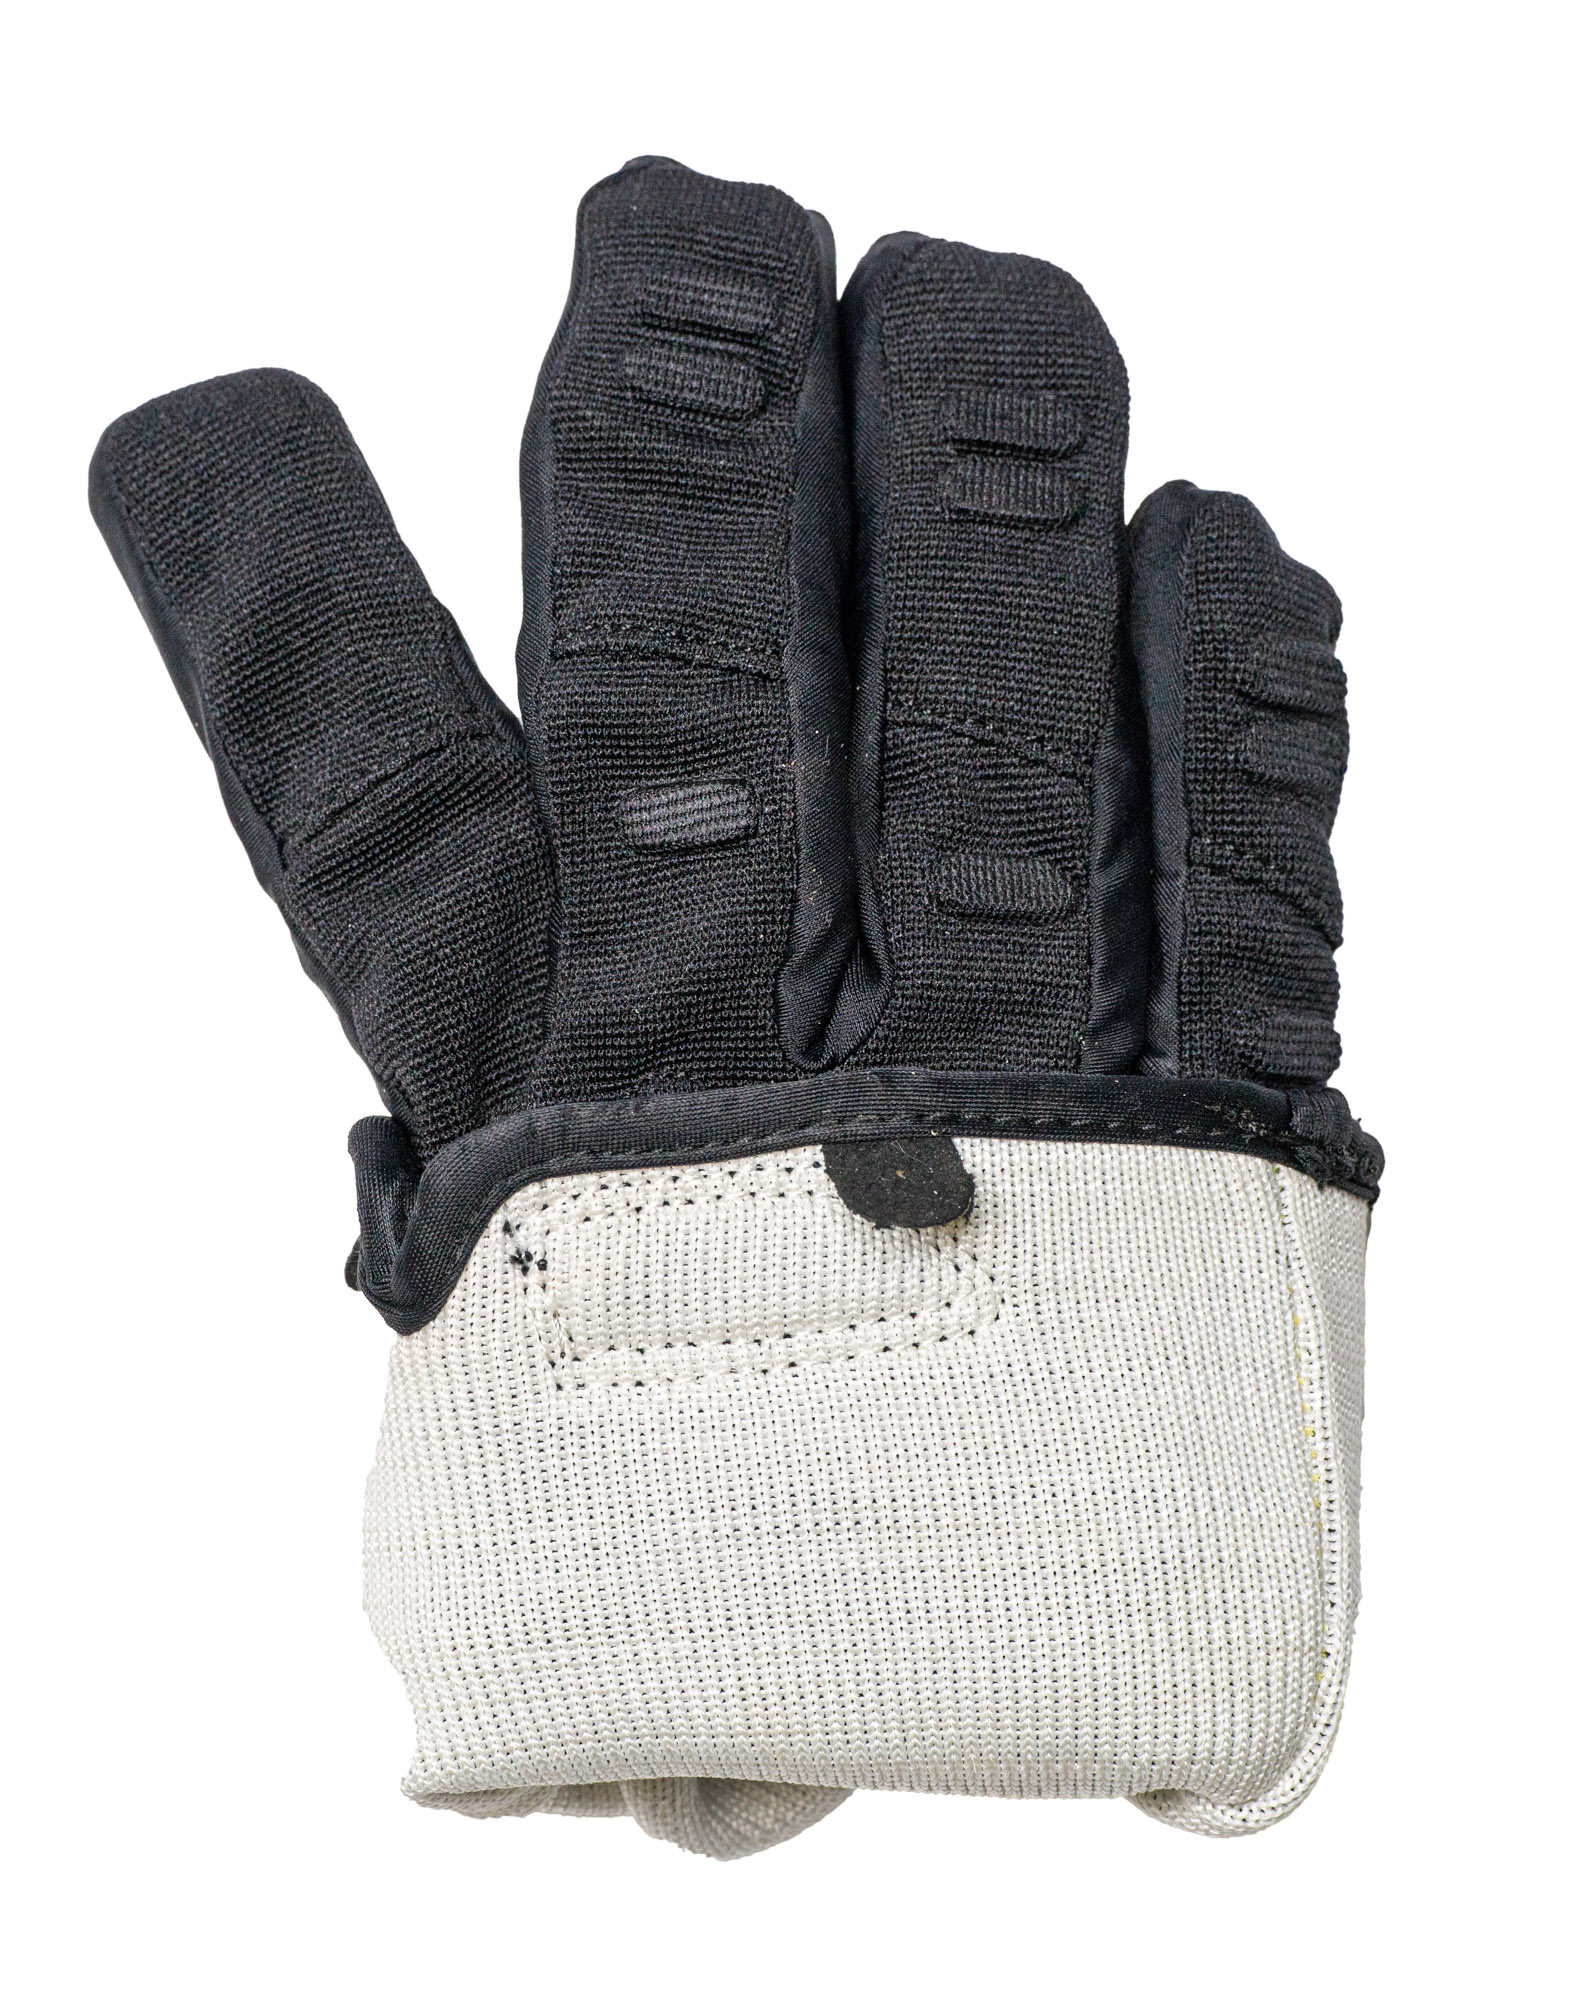 Protective Glove "Quantum 100" LONG